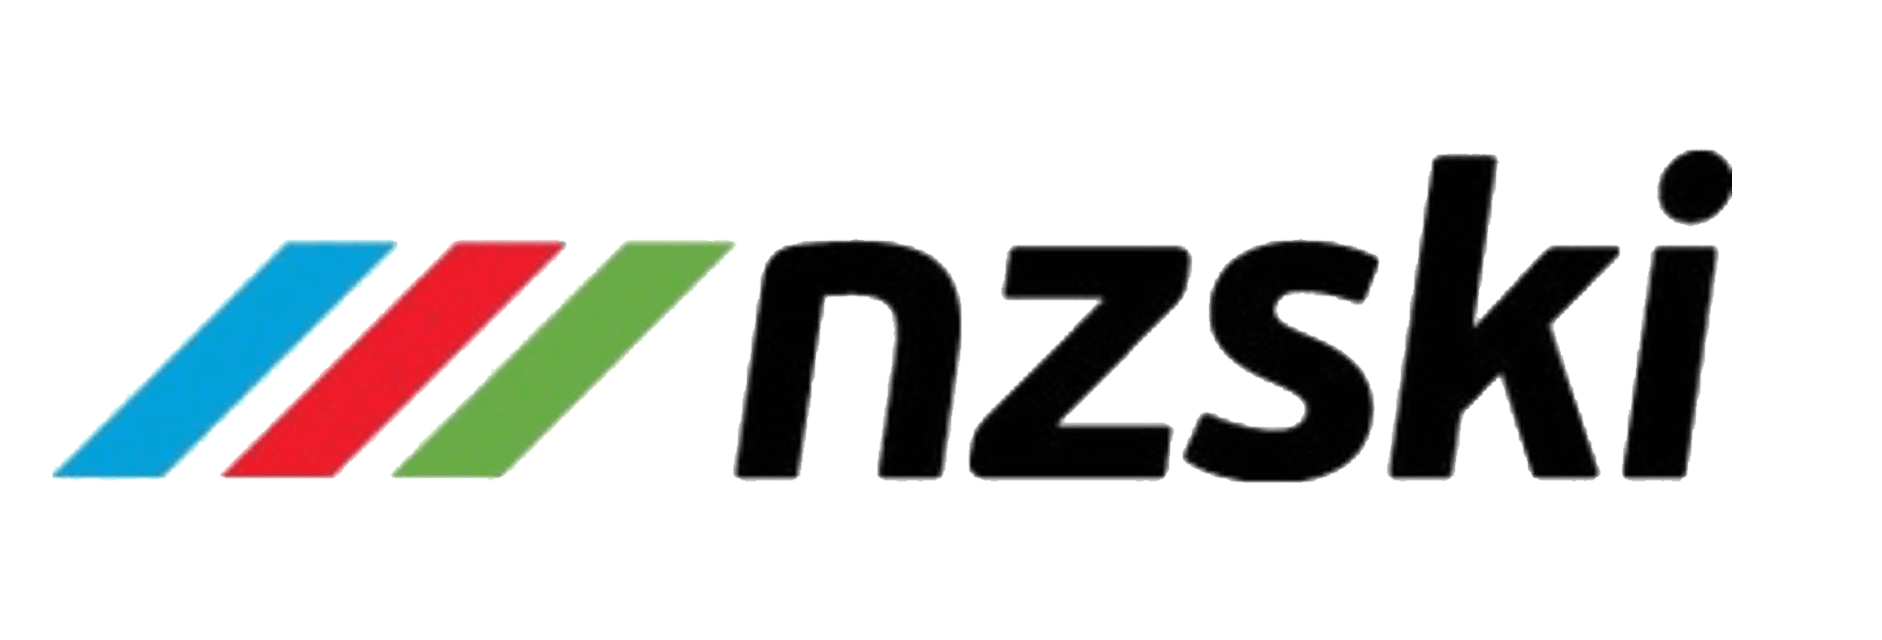 NZSki logo